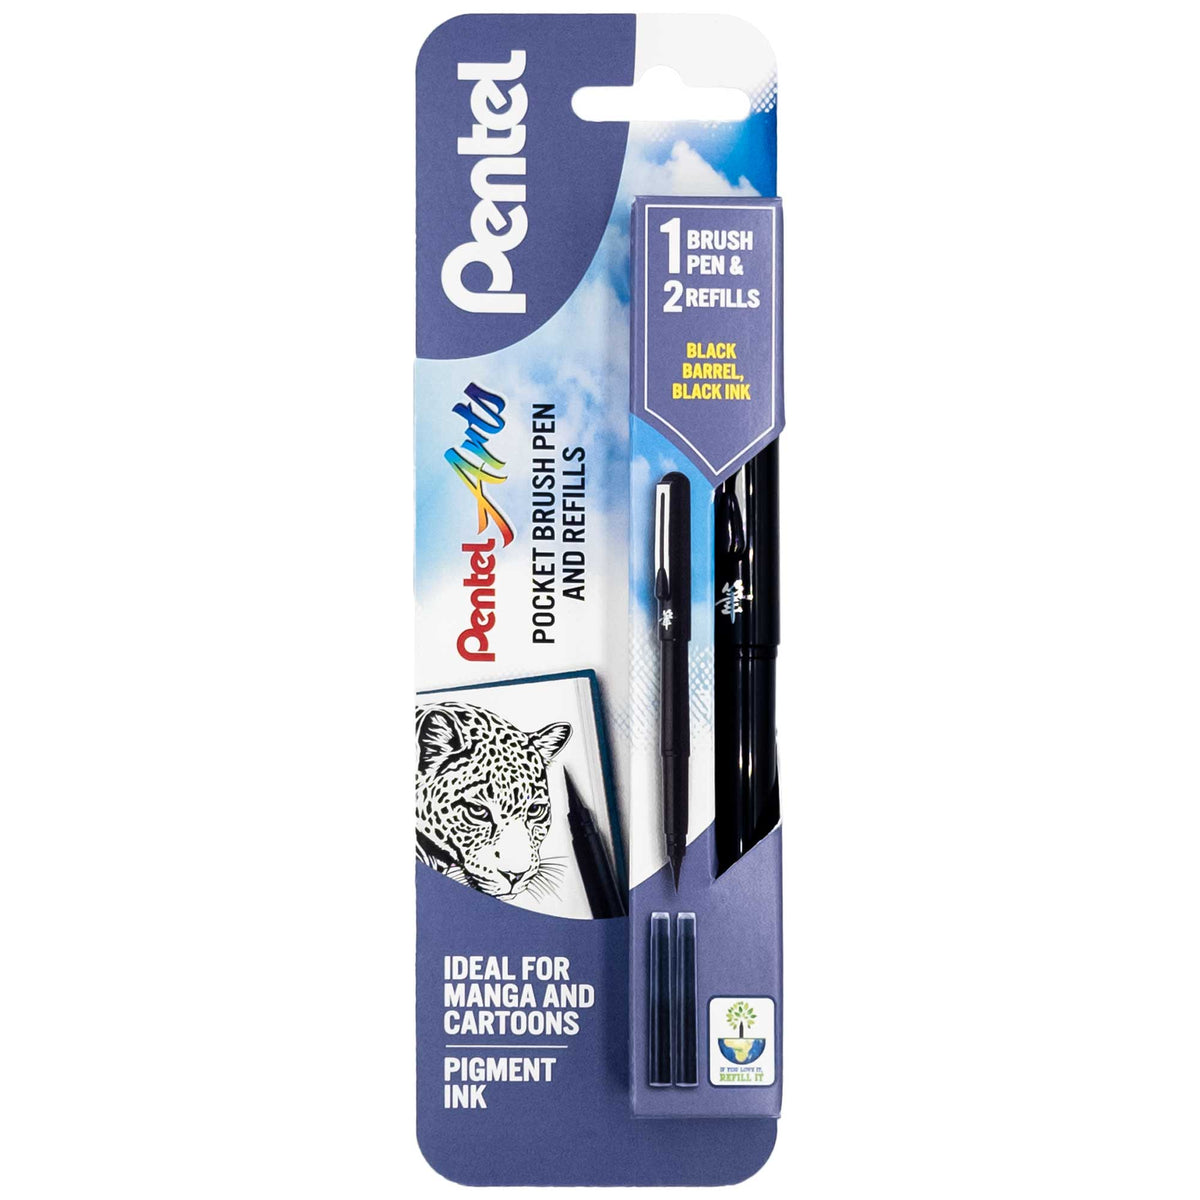 Pentel Pocket Brush Pens + 2 Refills - Black